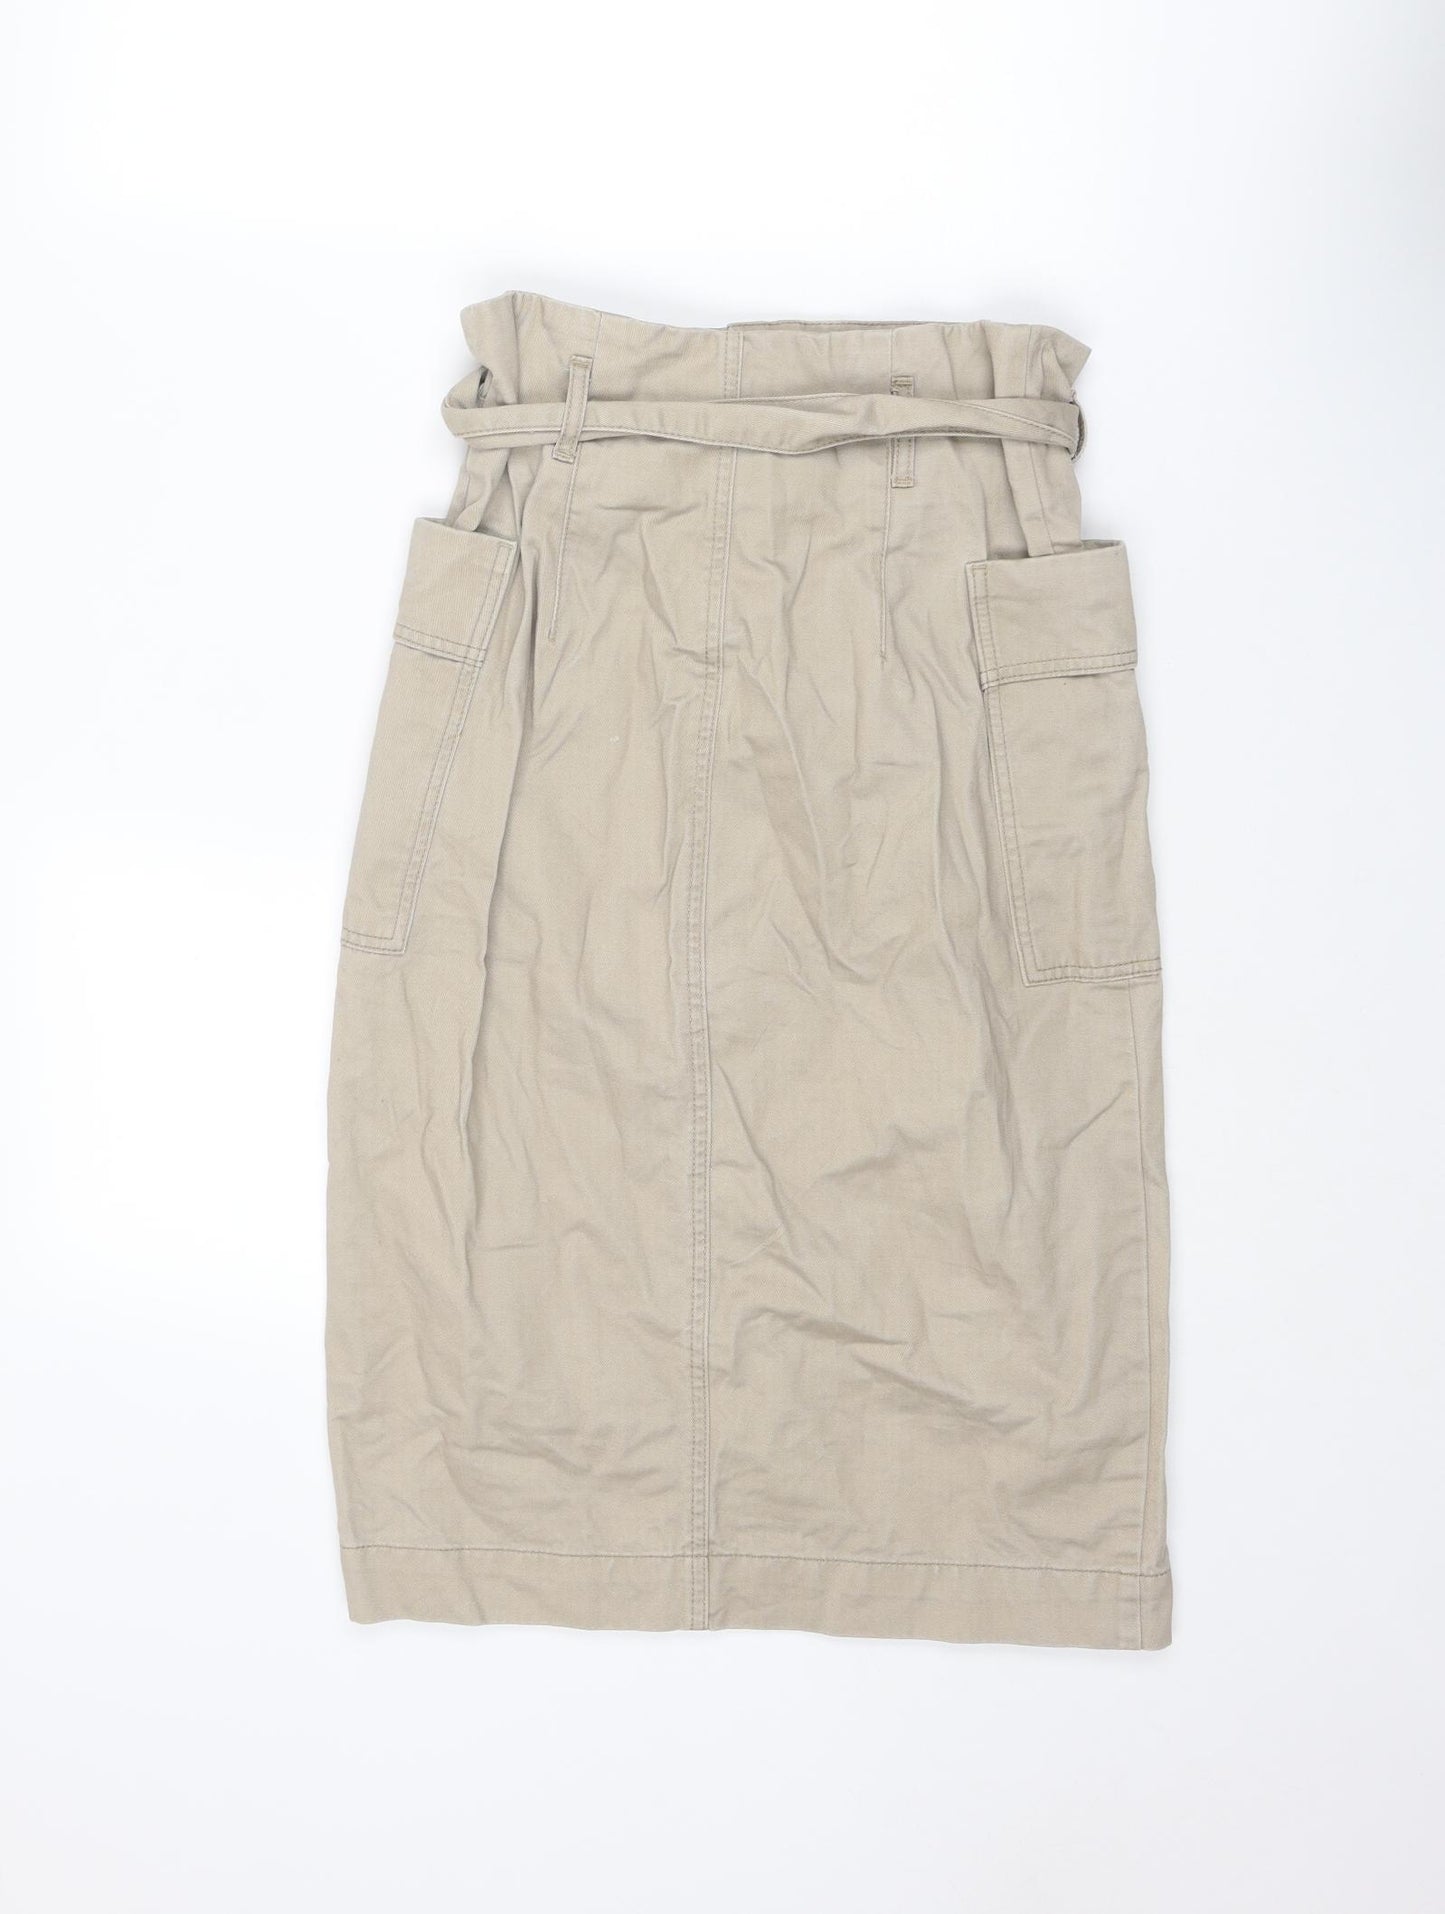 H&M Womens Beige Cotton Cargo Skirt Size 10 Zip - Belt included